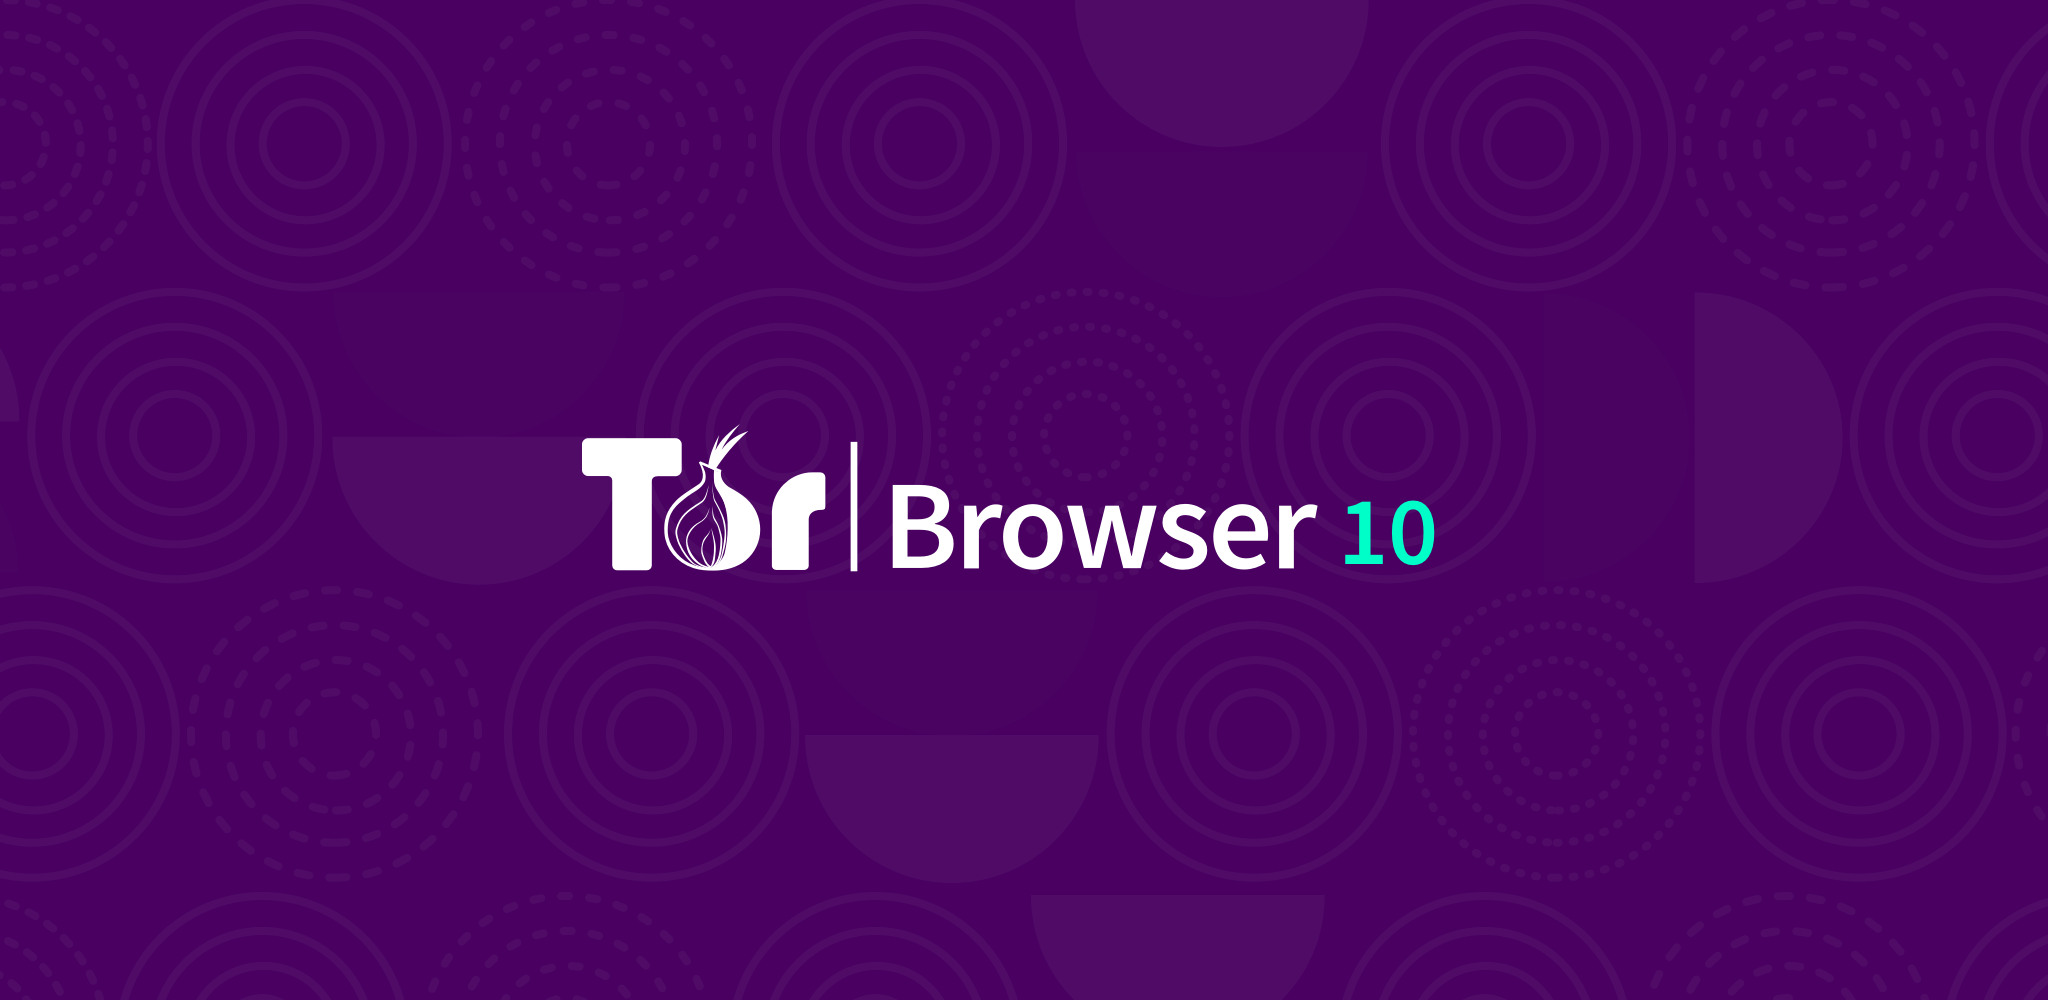 Start tor browser скачать мега тор браузер на виндовс 10 mega2web